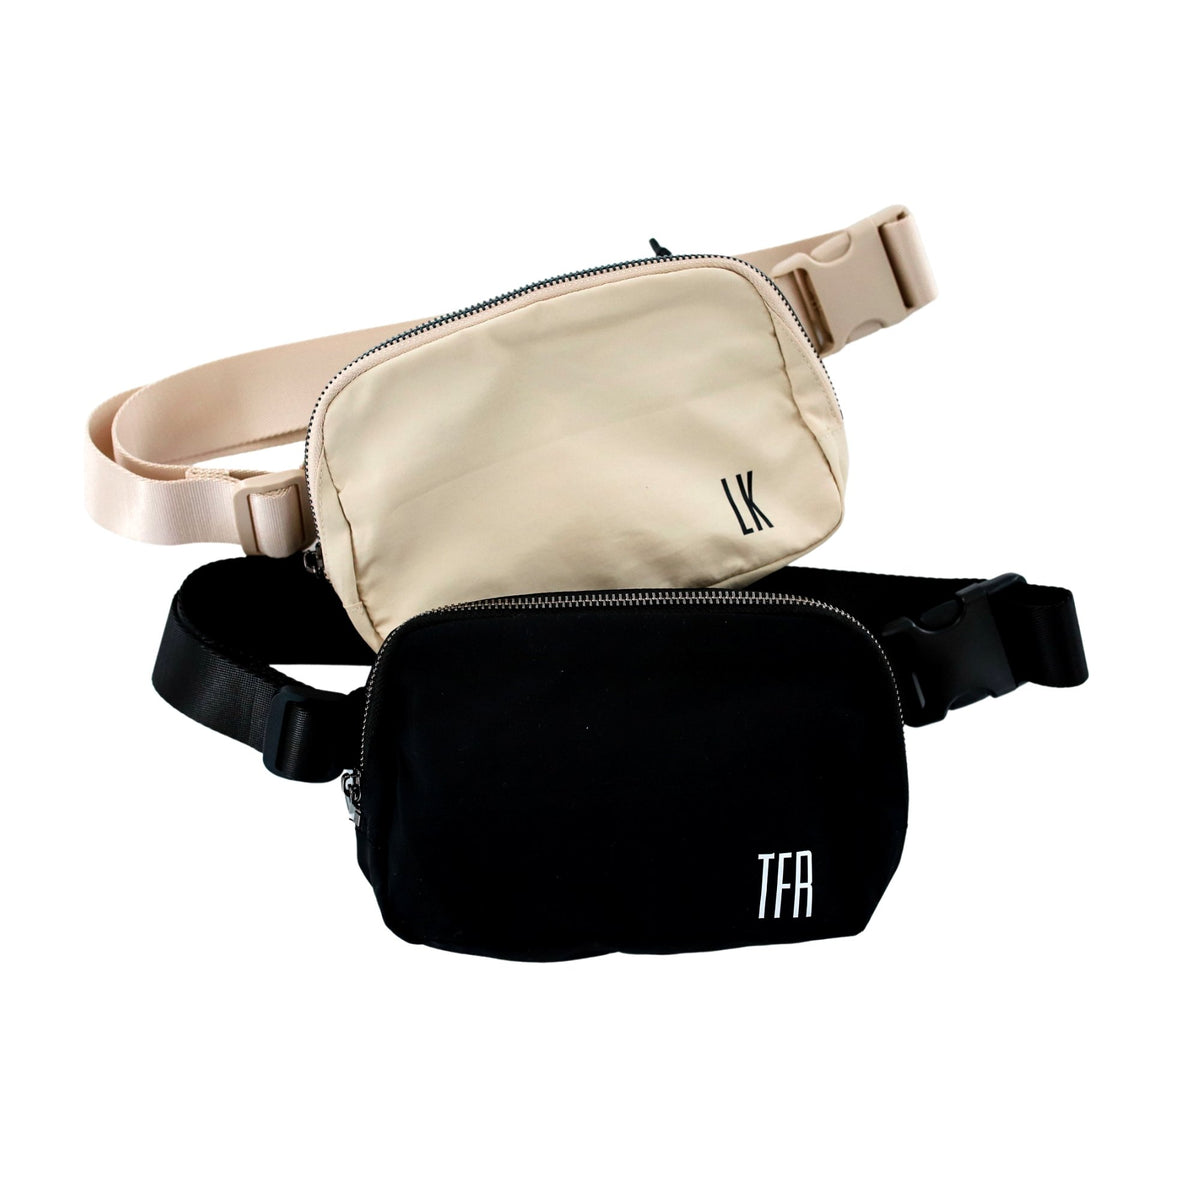 Monogram-print belt bag, HealthdesignShops